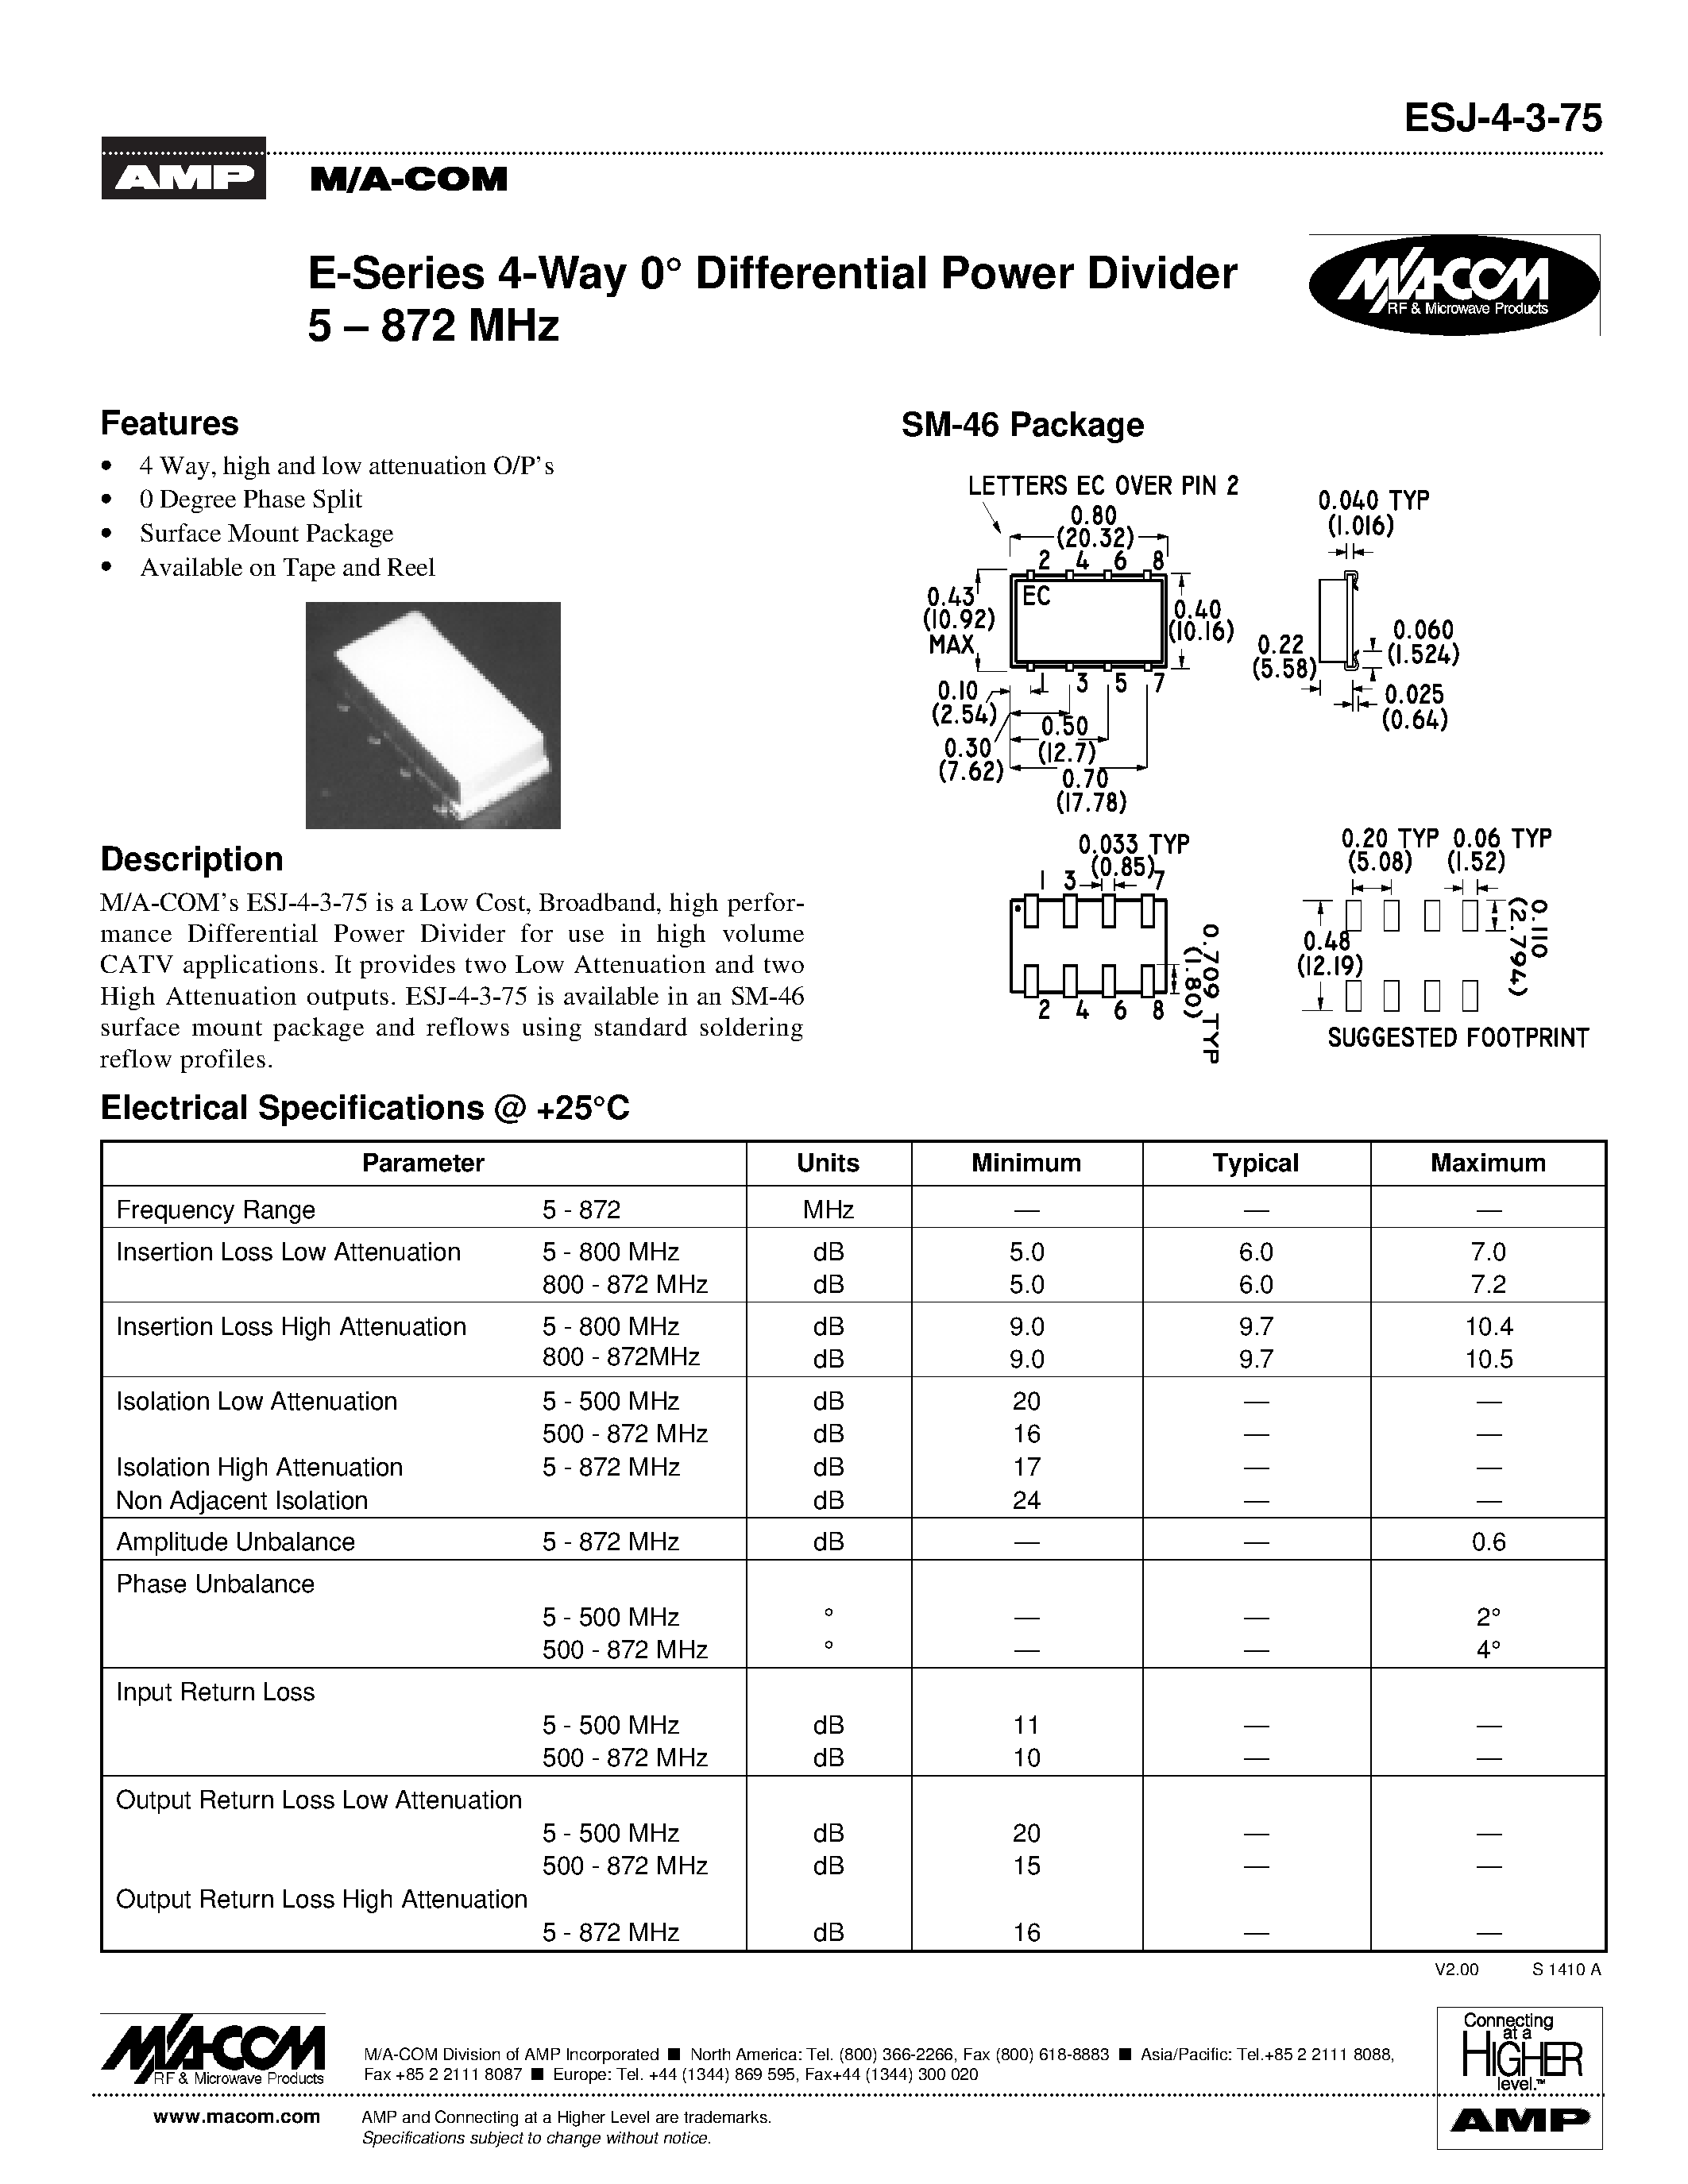 Даташит ESJ-4-3-75-E-Series 4-Way 0 Differential Power Divider 5 - 872 MHz страница 1